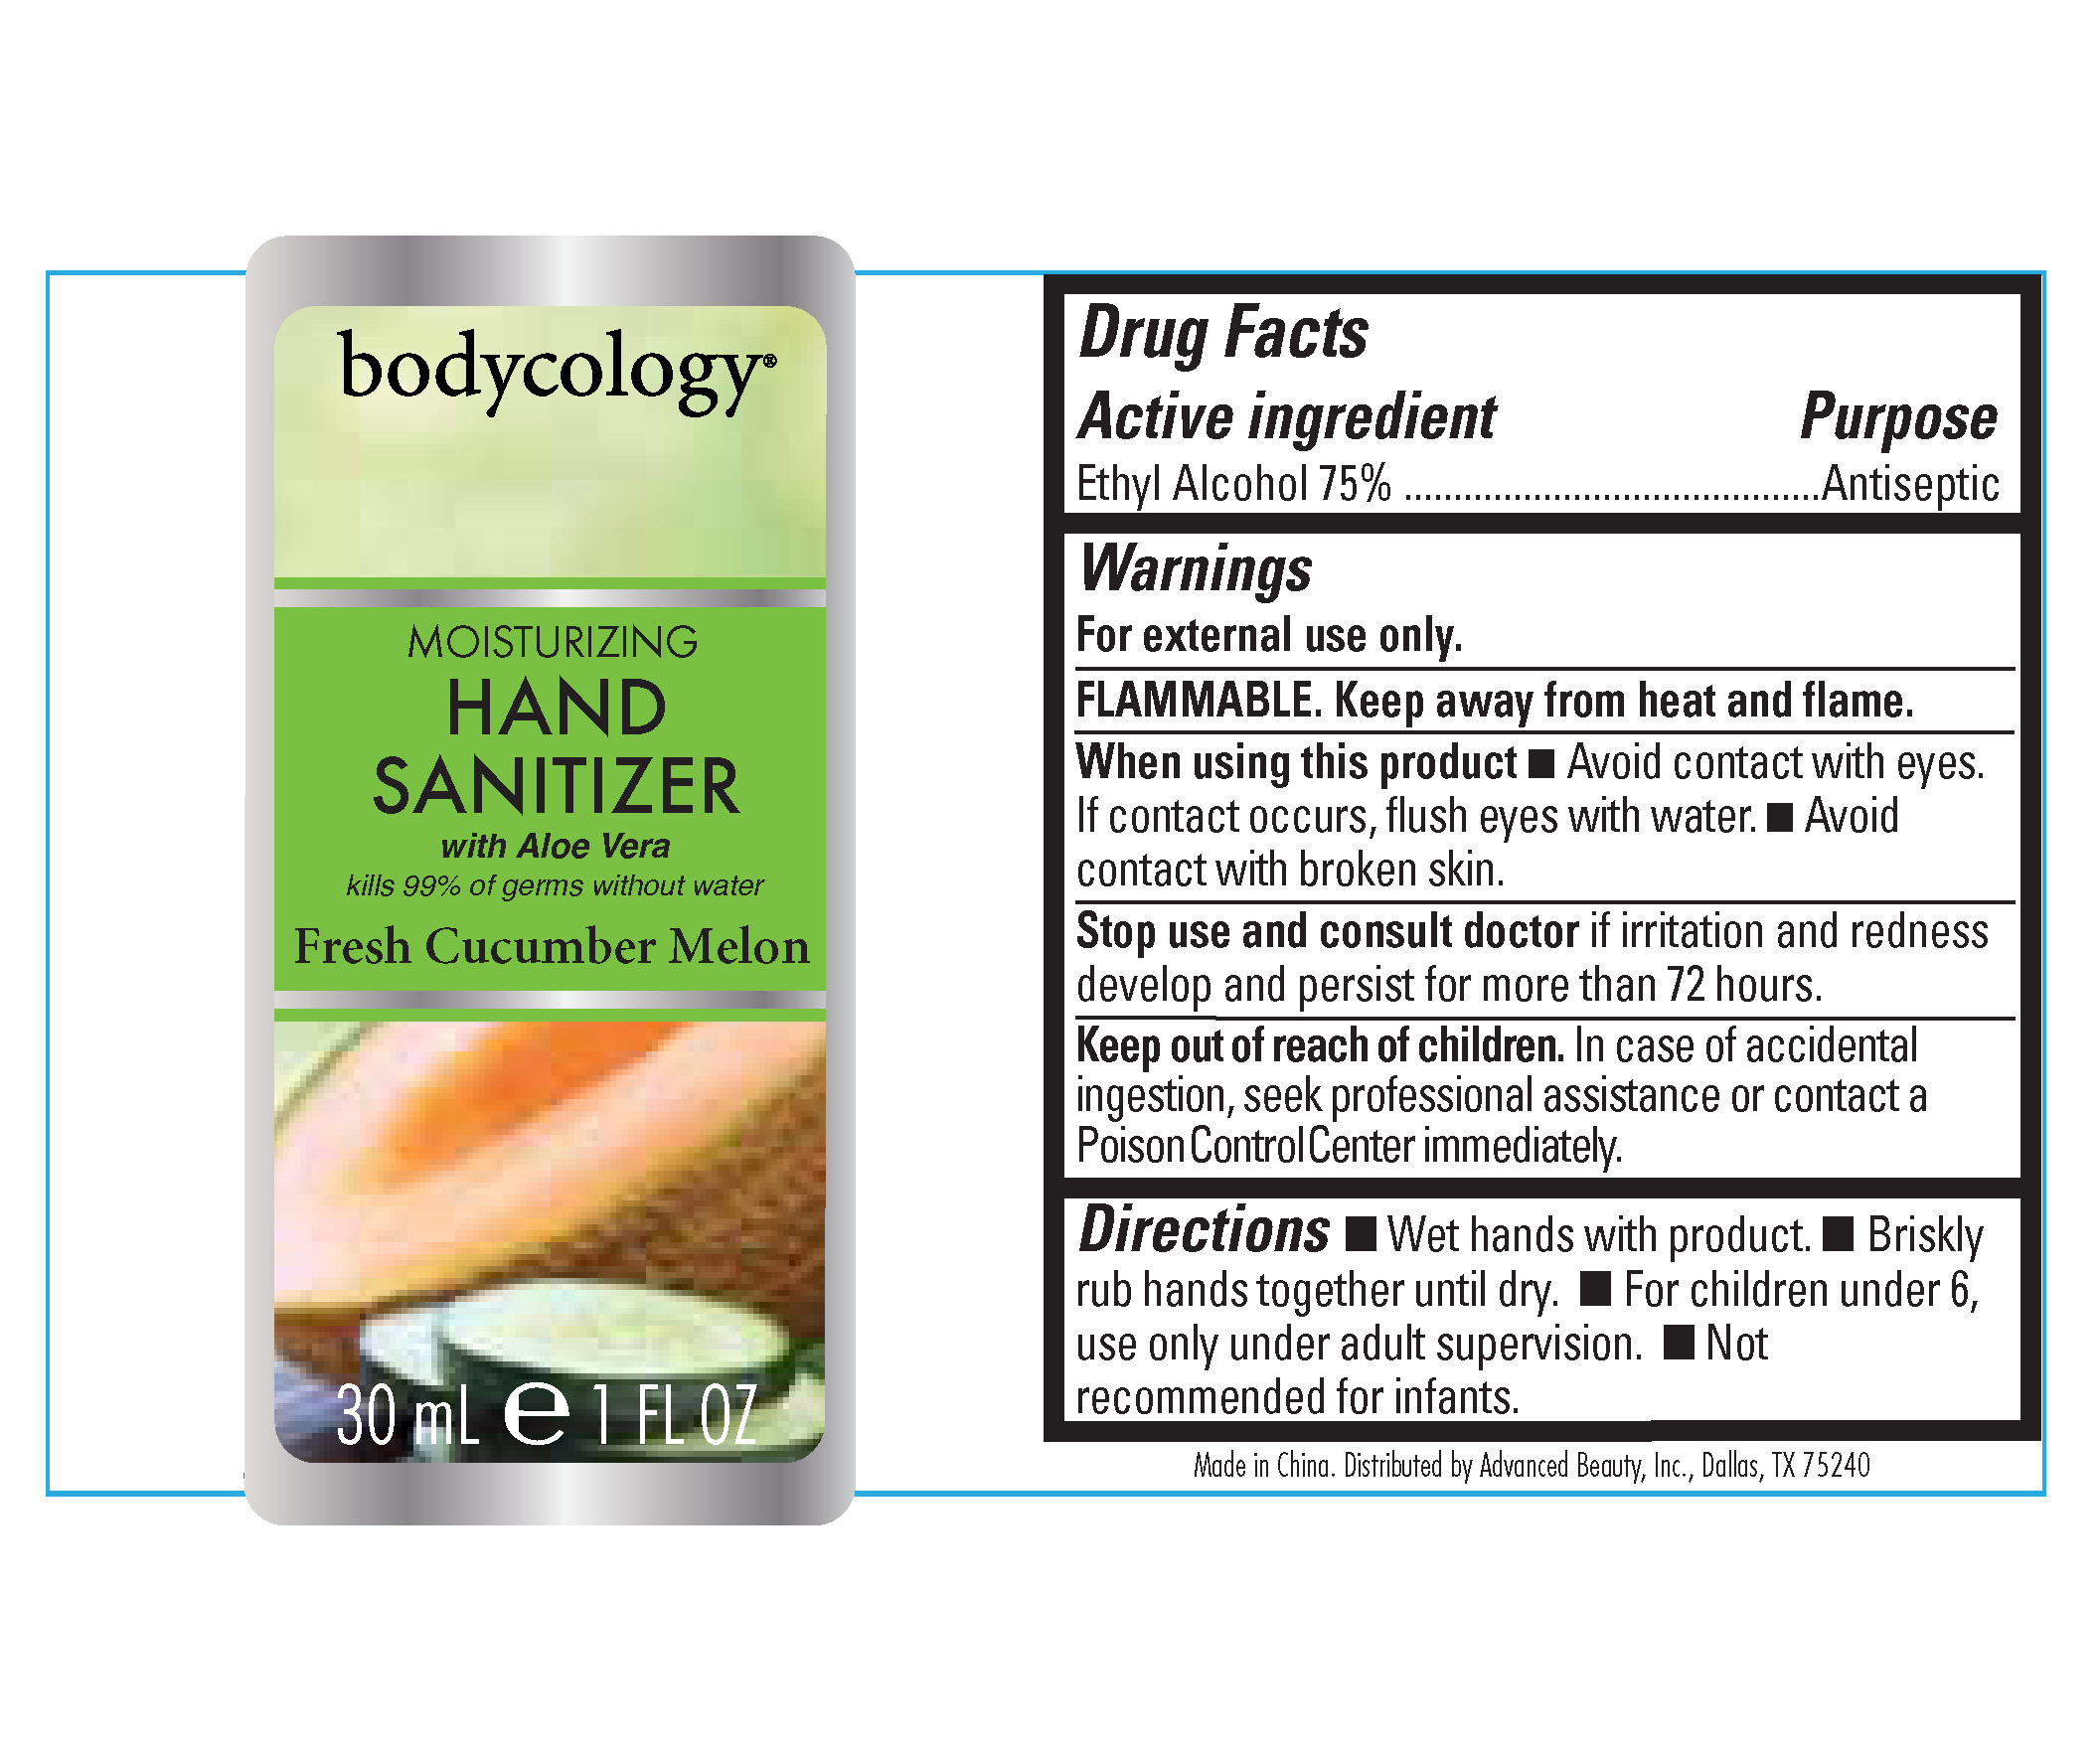 Fresh Cucumber Melon Bodycology (Ethyl Alcohol) Liquid [Advanced Beauty Systems, Inc.]